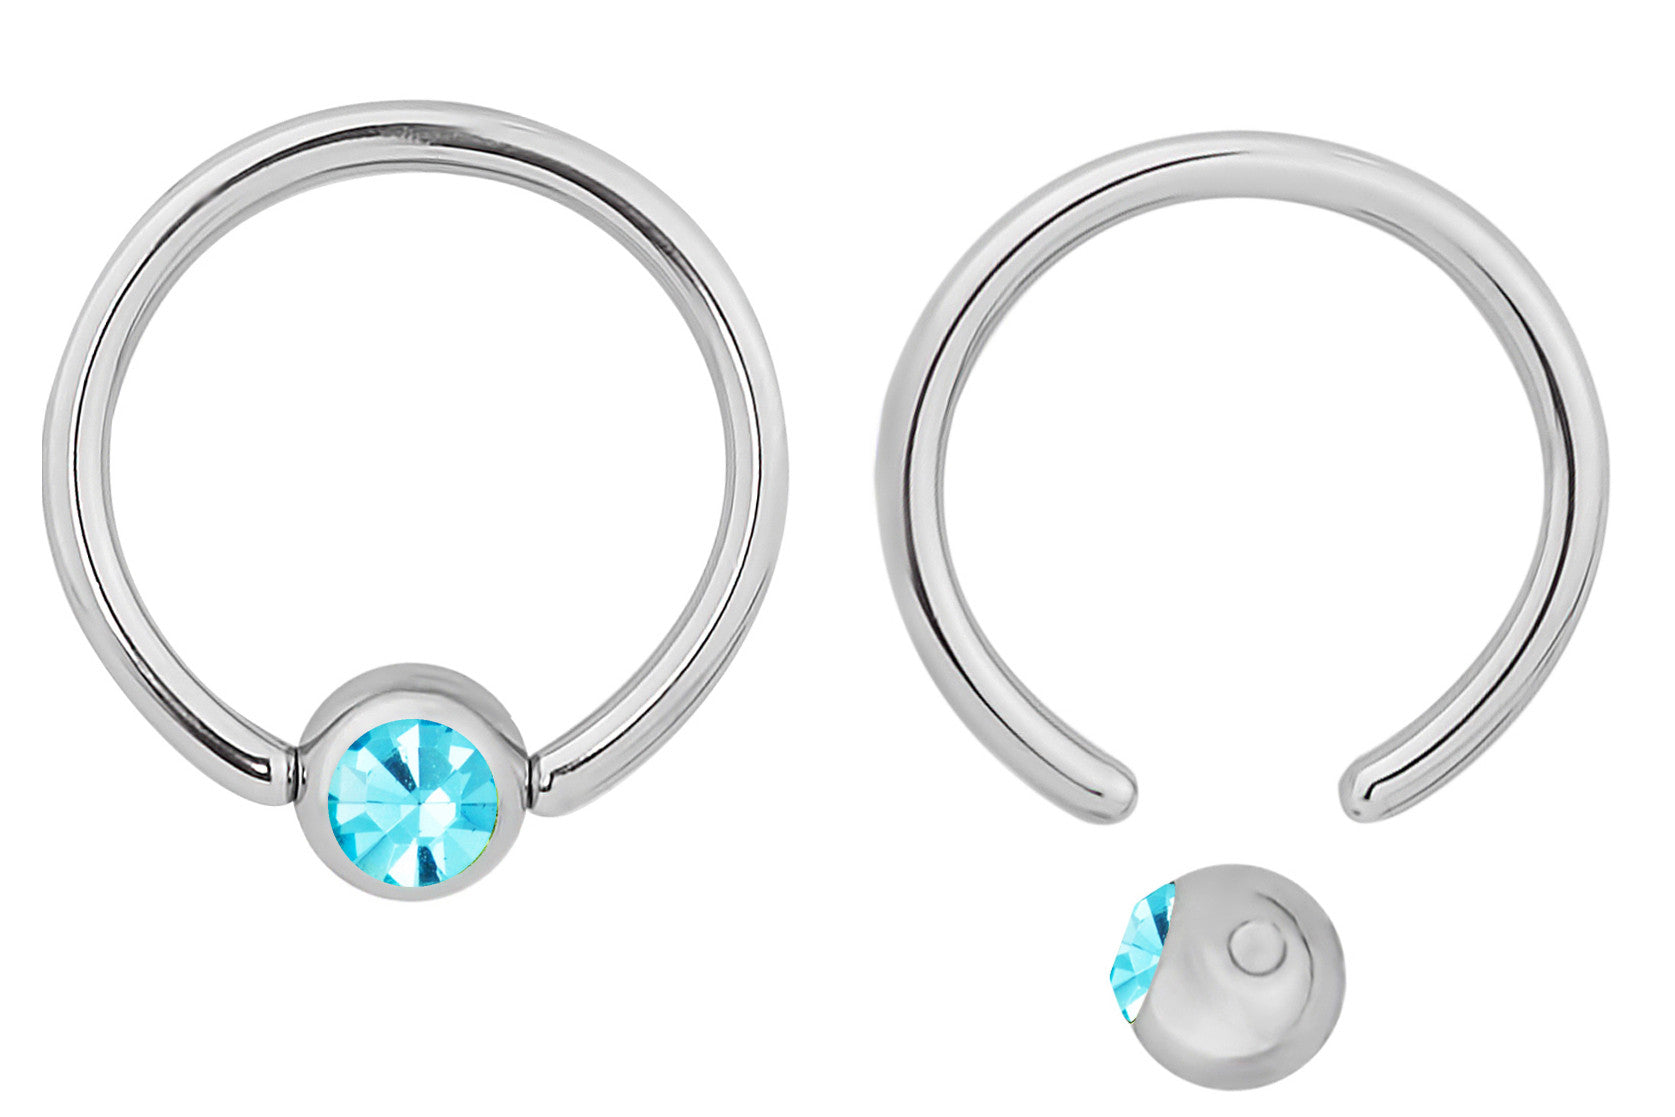 Pair of Captive Bead Rings with Aqua Gems